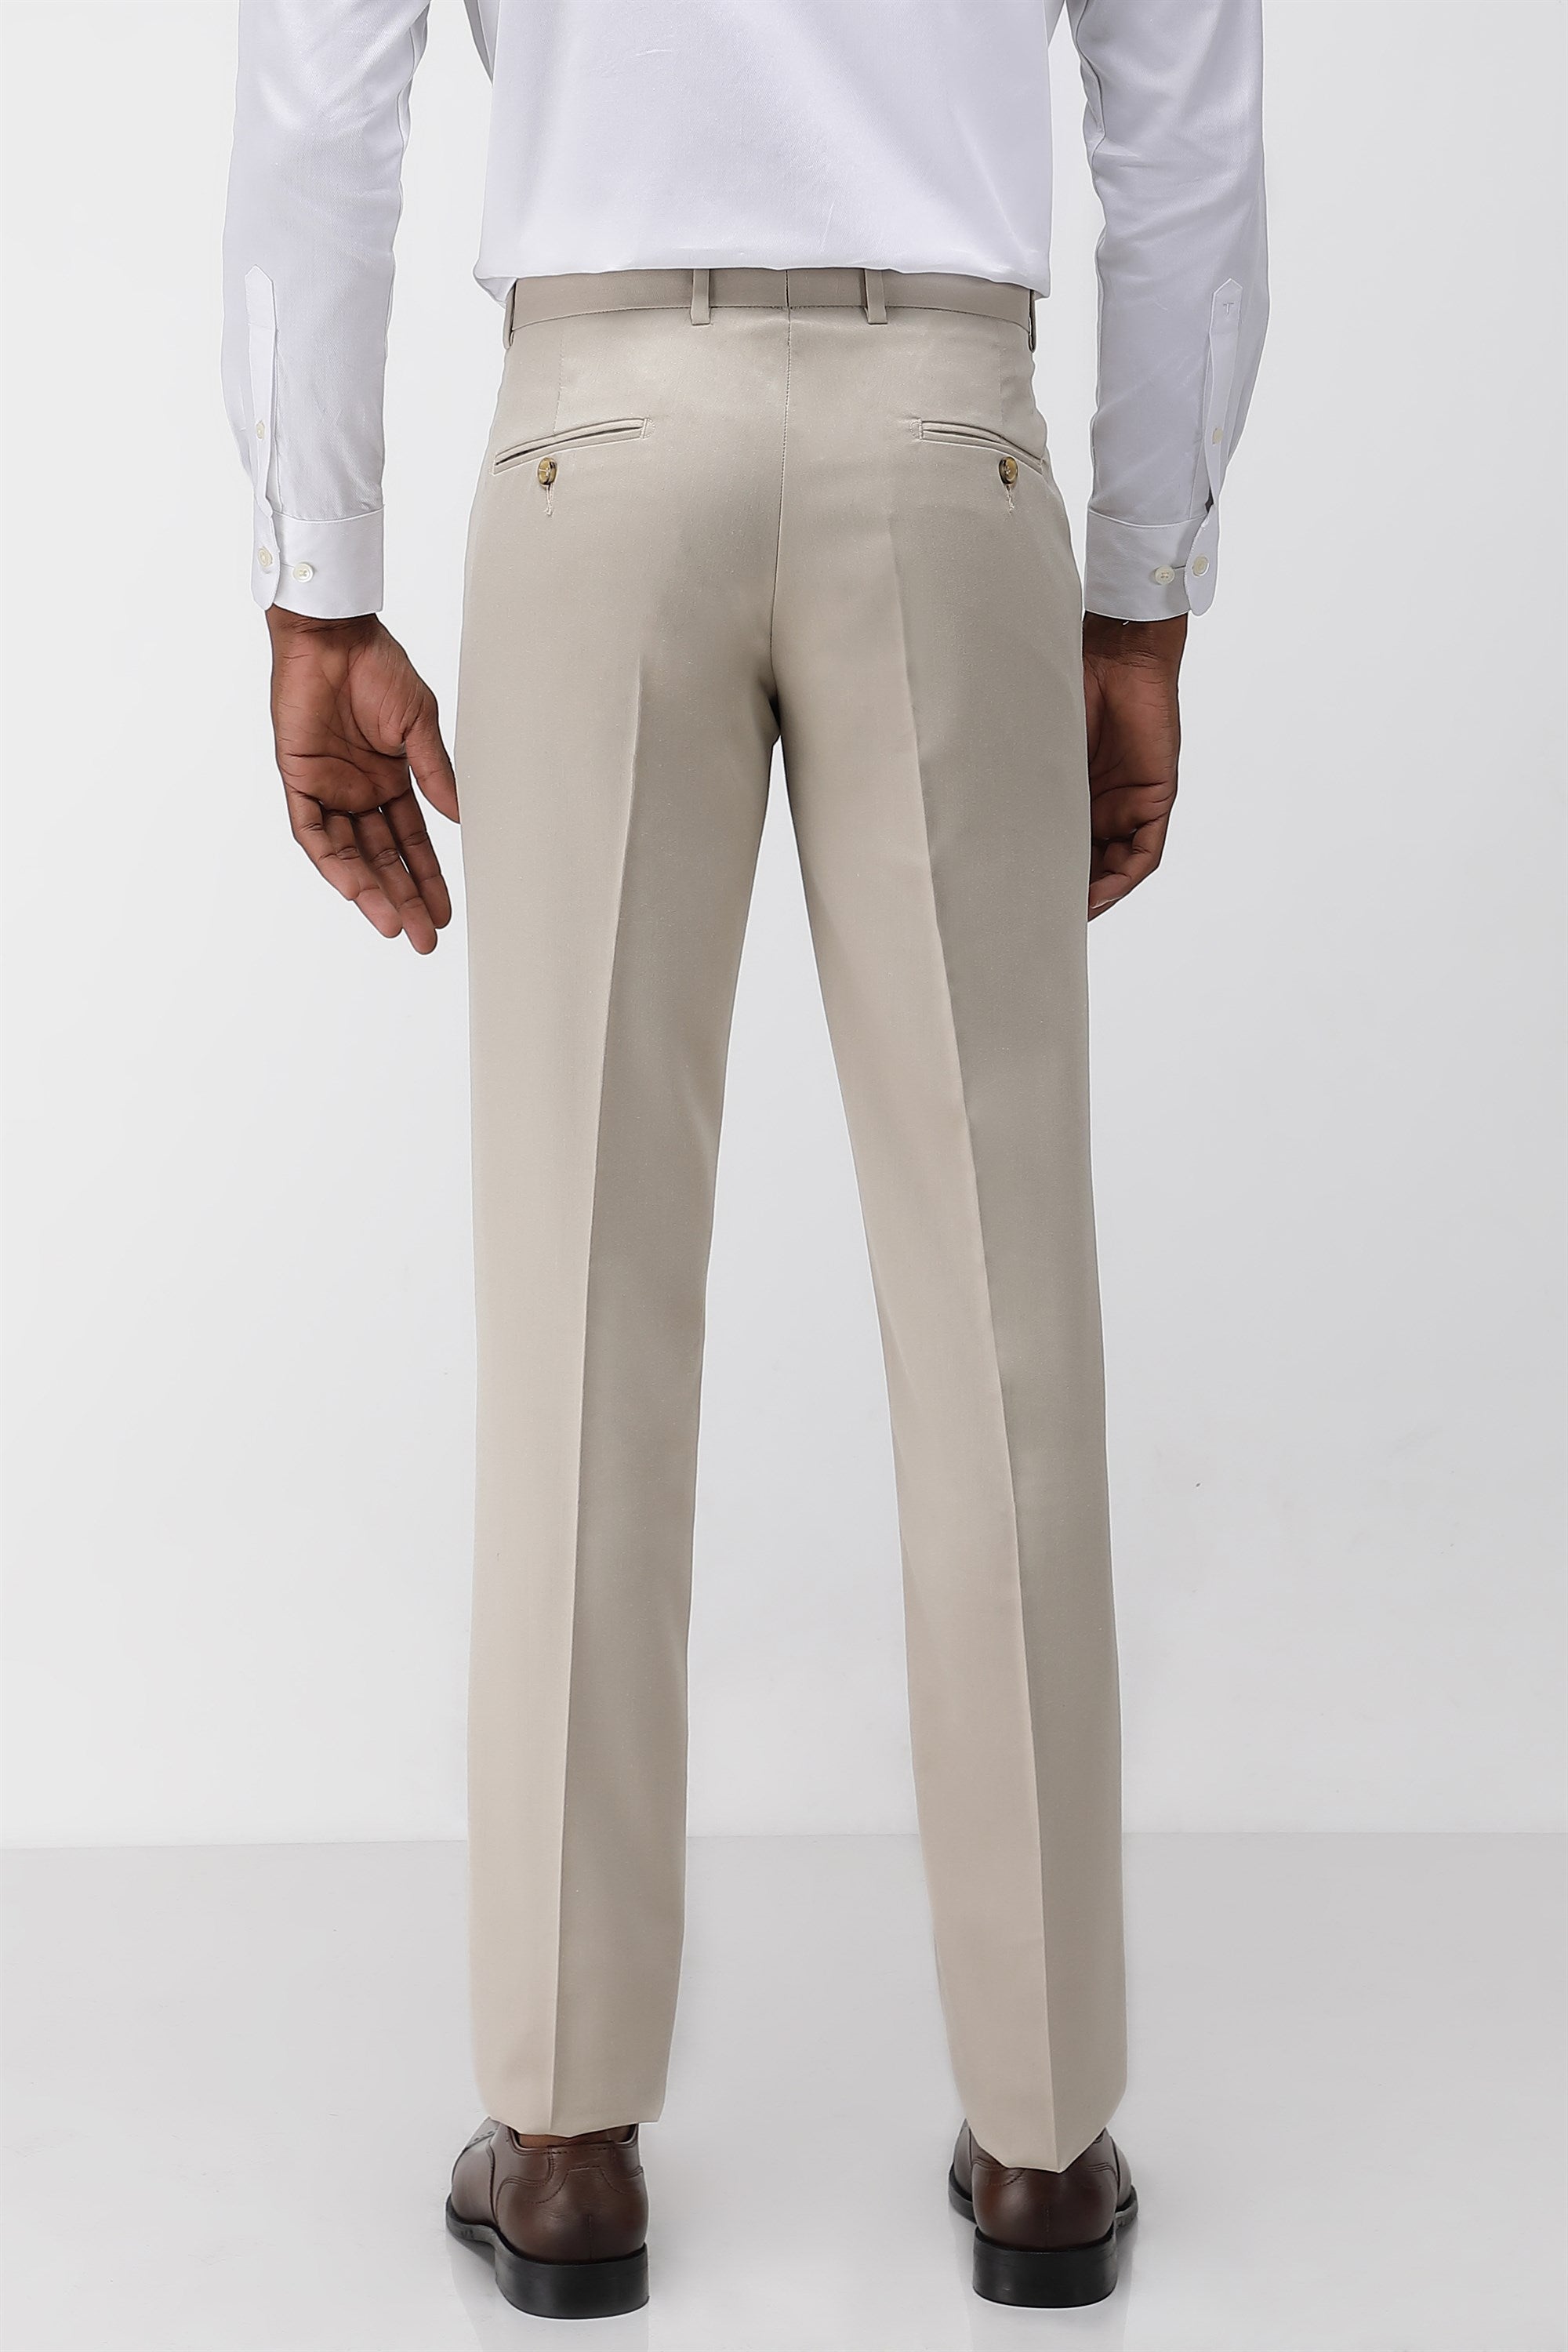 T the brand Mens Formal Flat Front Crease Trouser - Khaki